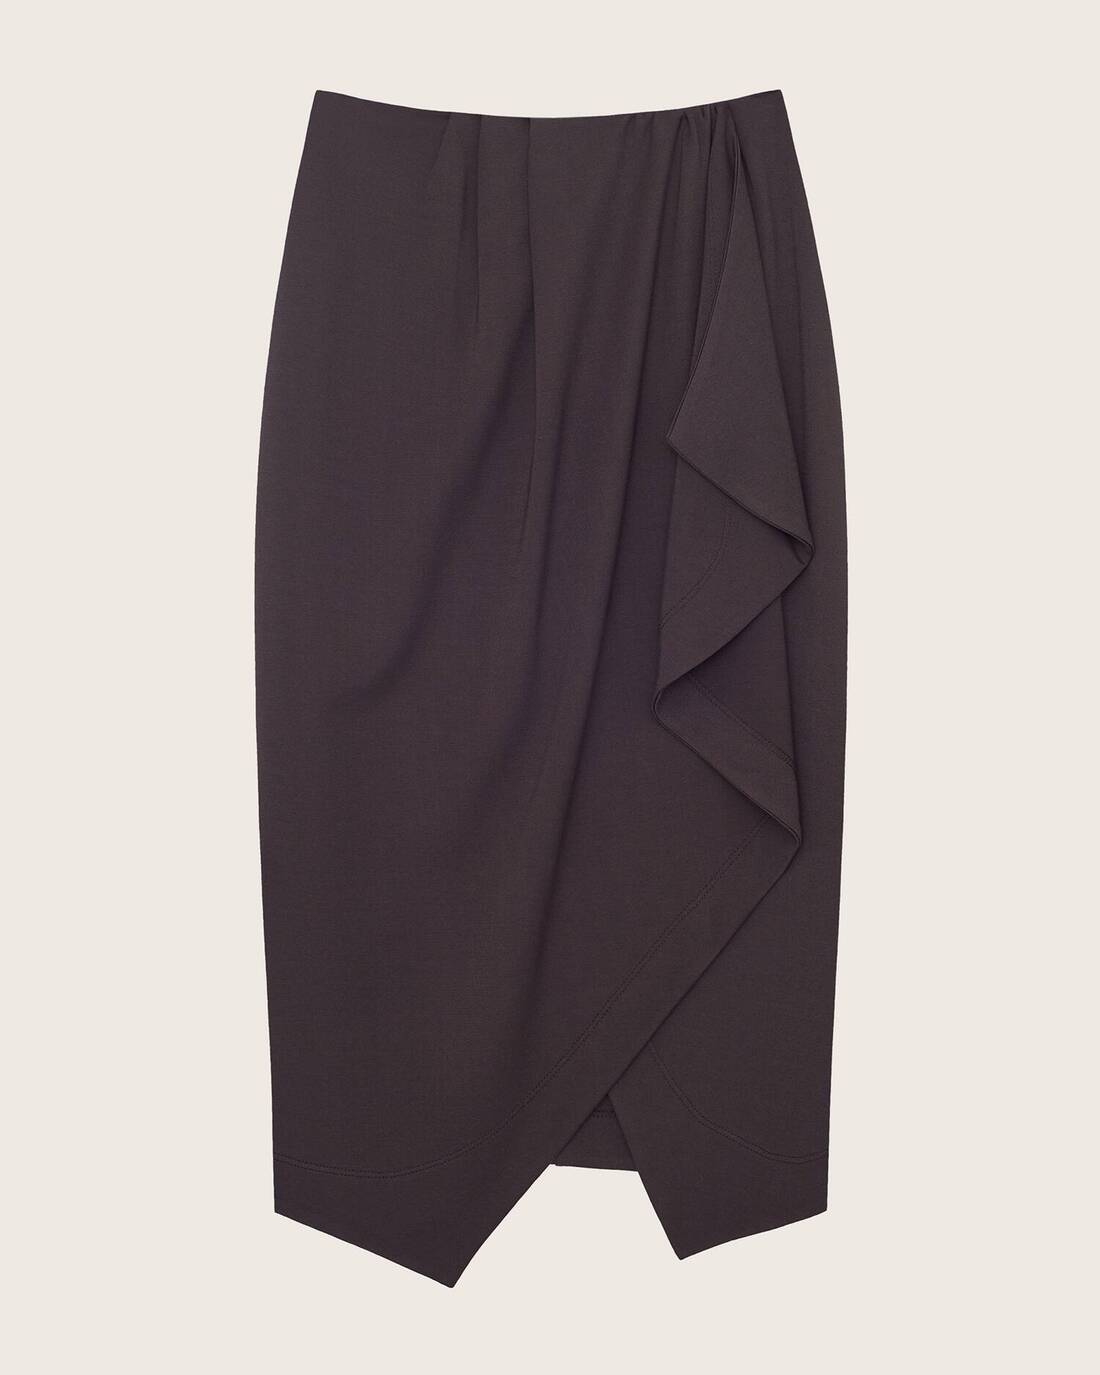 Jersey skirt with a flounce